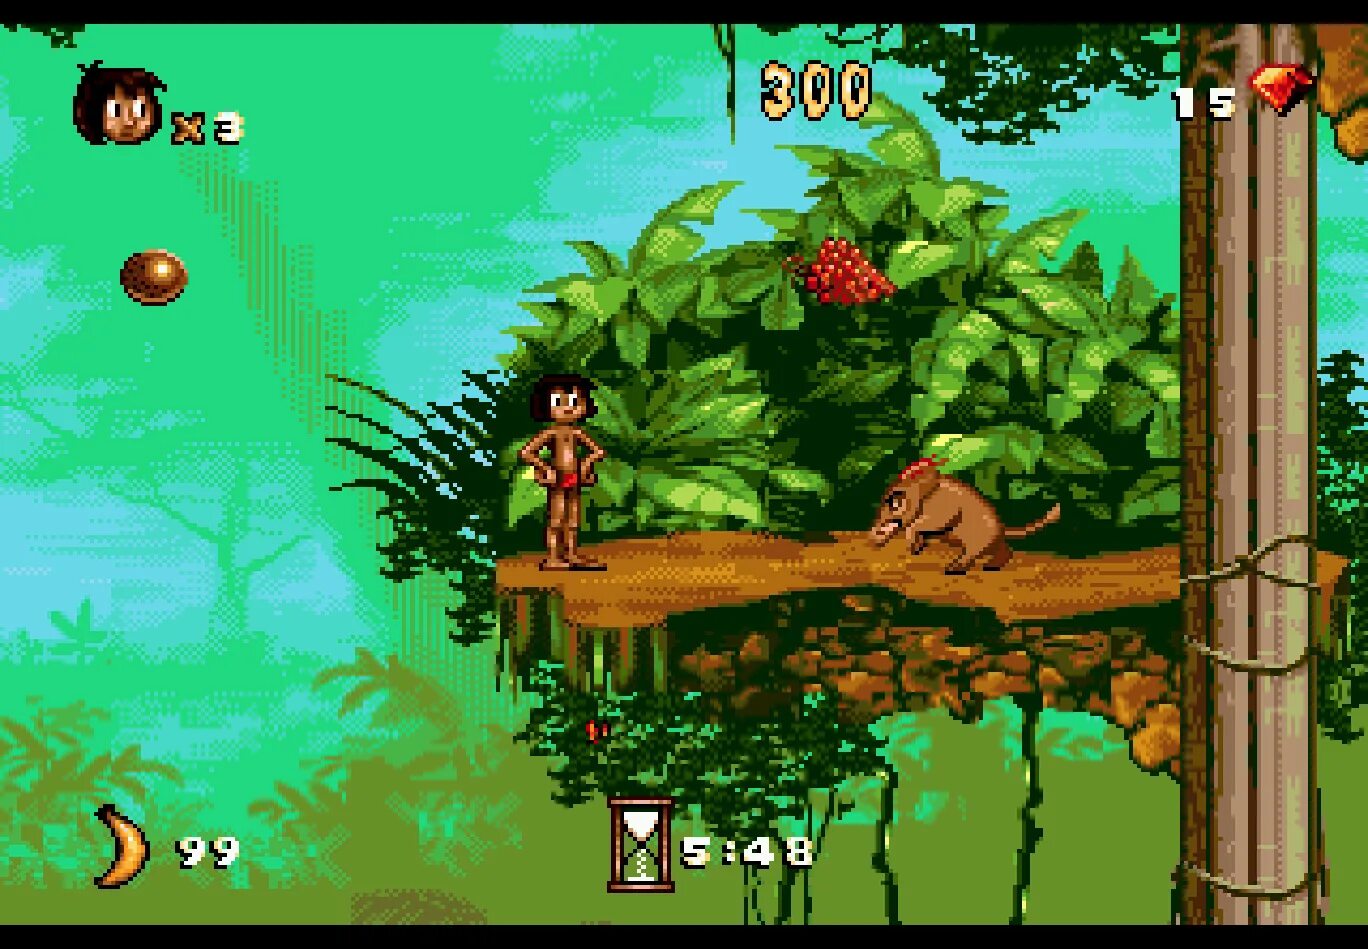 The Jungle book (игра). Маугли игра сега. Игра Jungle book игра Sega. Игра Маугли 1994. Игры бегать джунгли